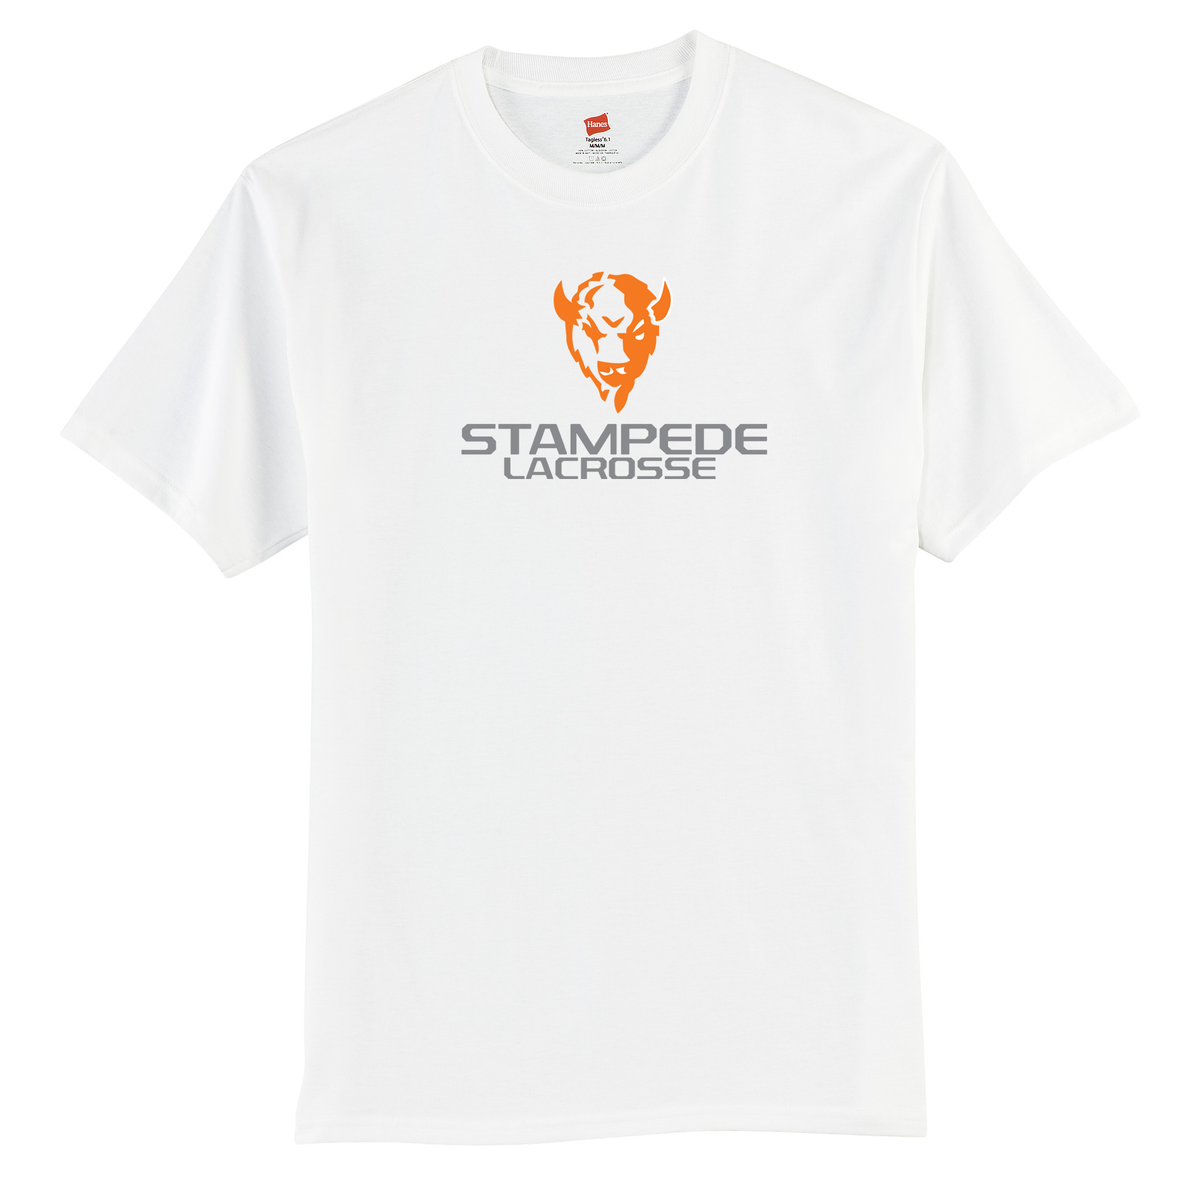 South Suburban Stampede T-Shirt